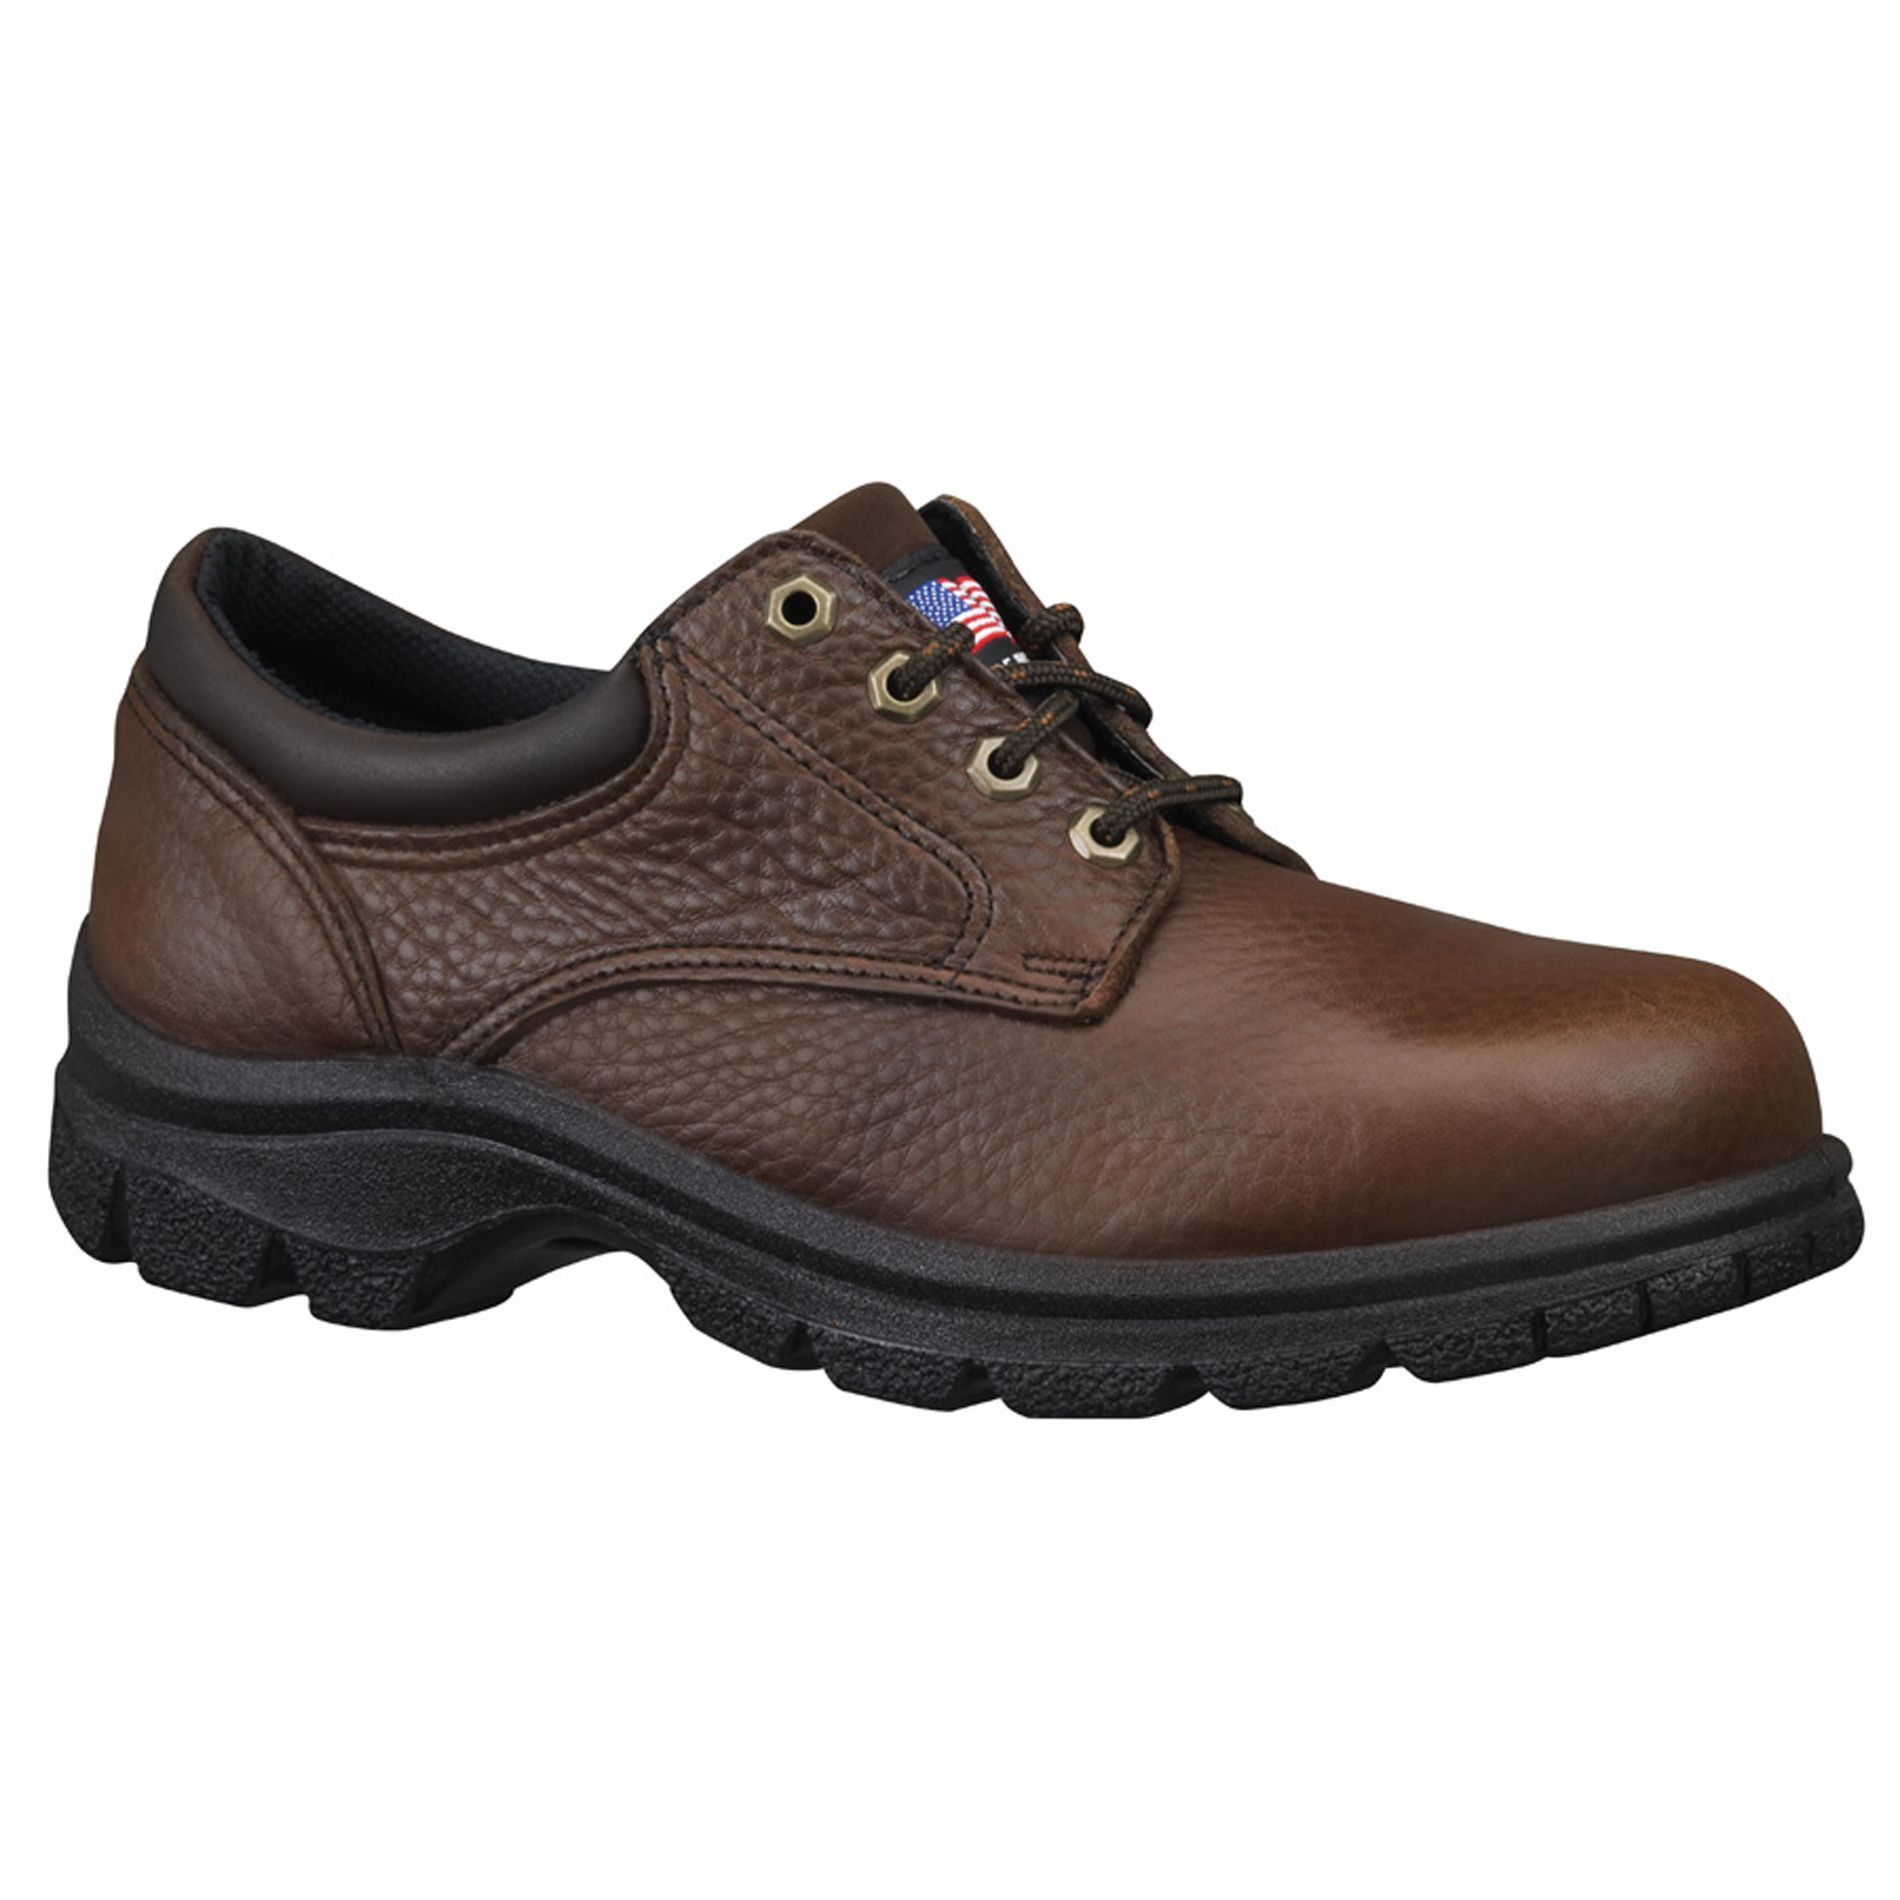 Thorogood Men's American Heritage 804-4760 Brown Steel Toe Work Shoes - Wide Width Available